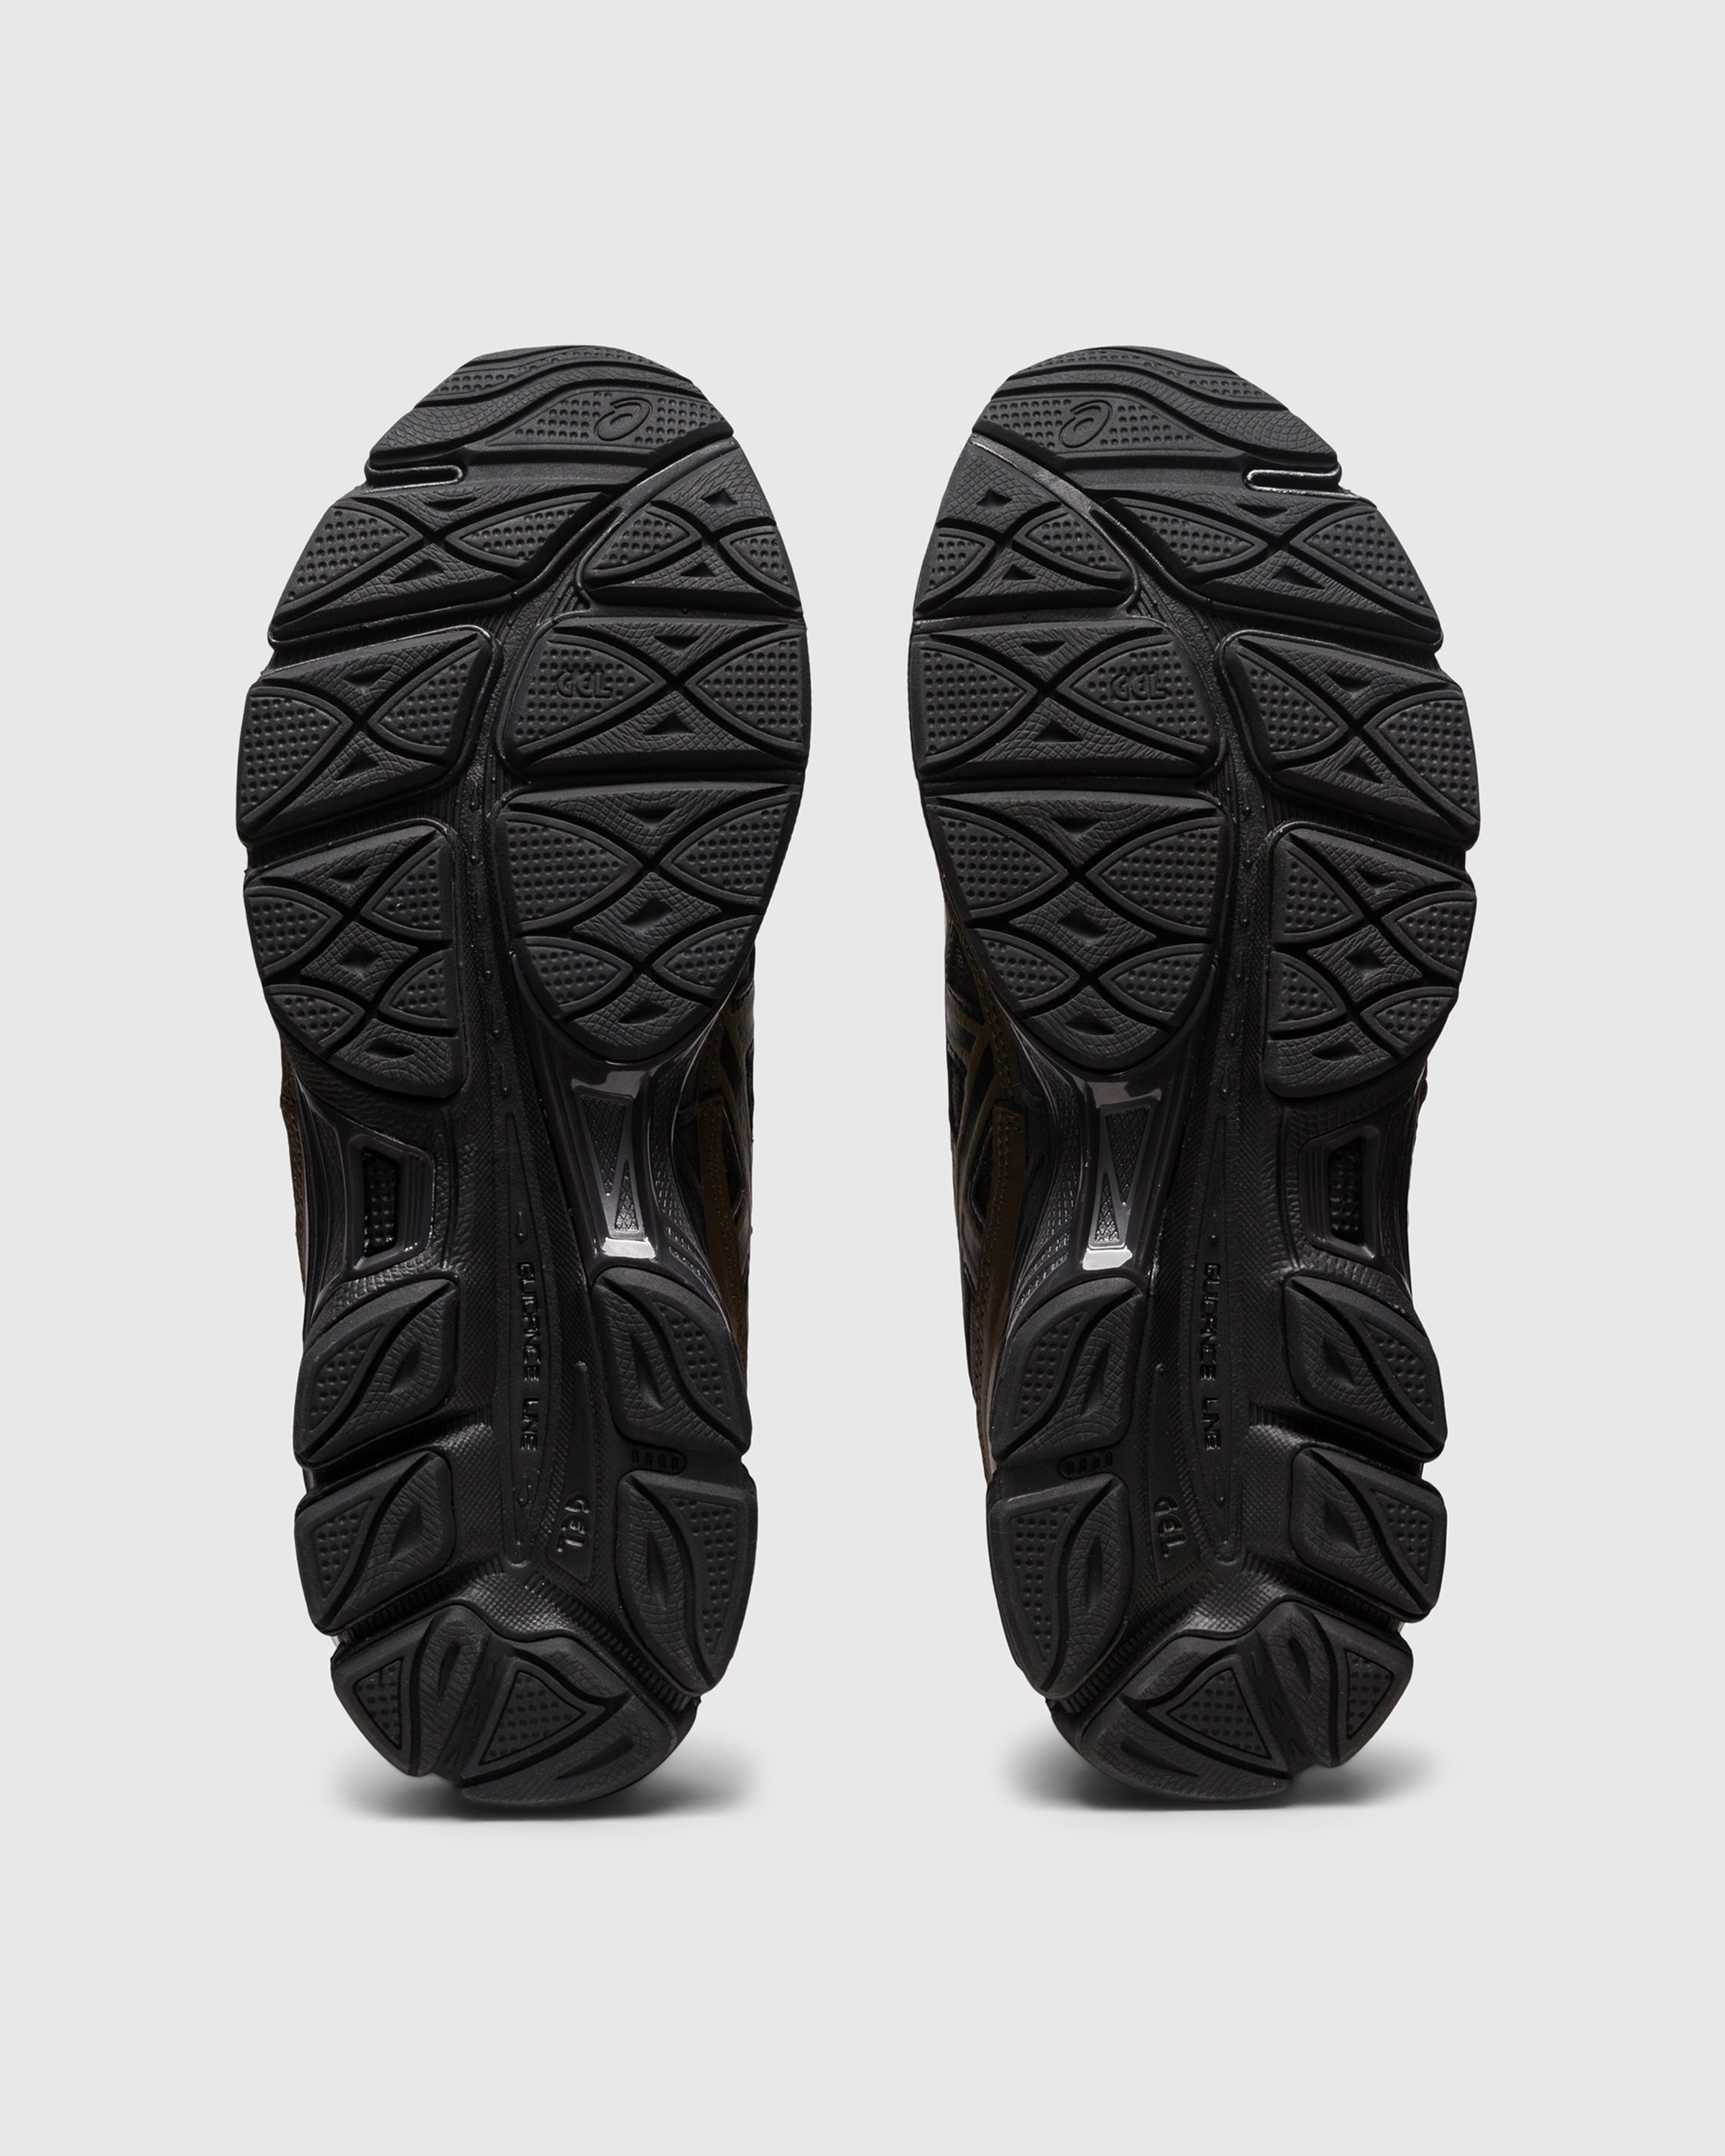 asics - GEL-NYC Dark Sepia/Clay Canyon - Footwear - Multi - Image 6